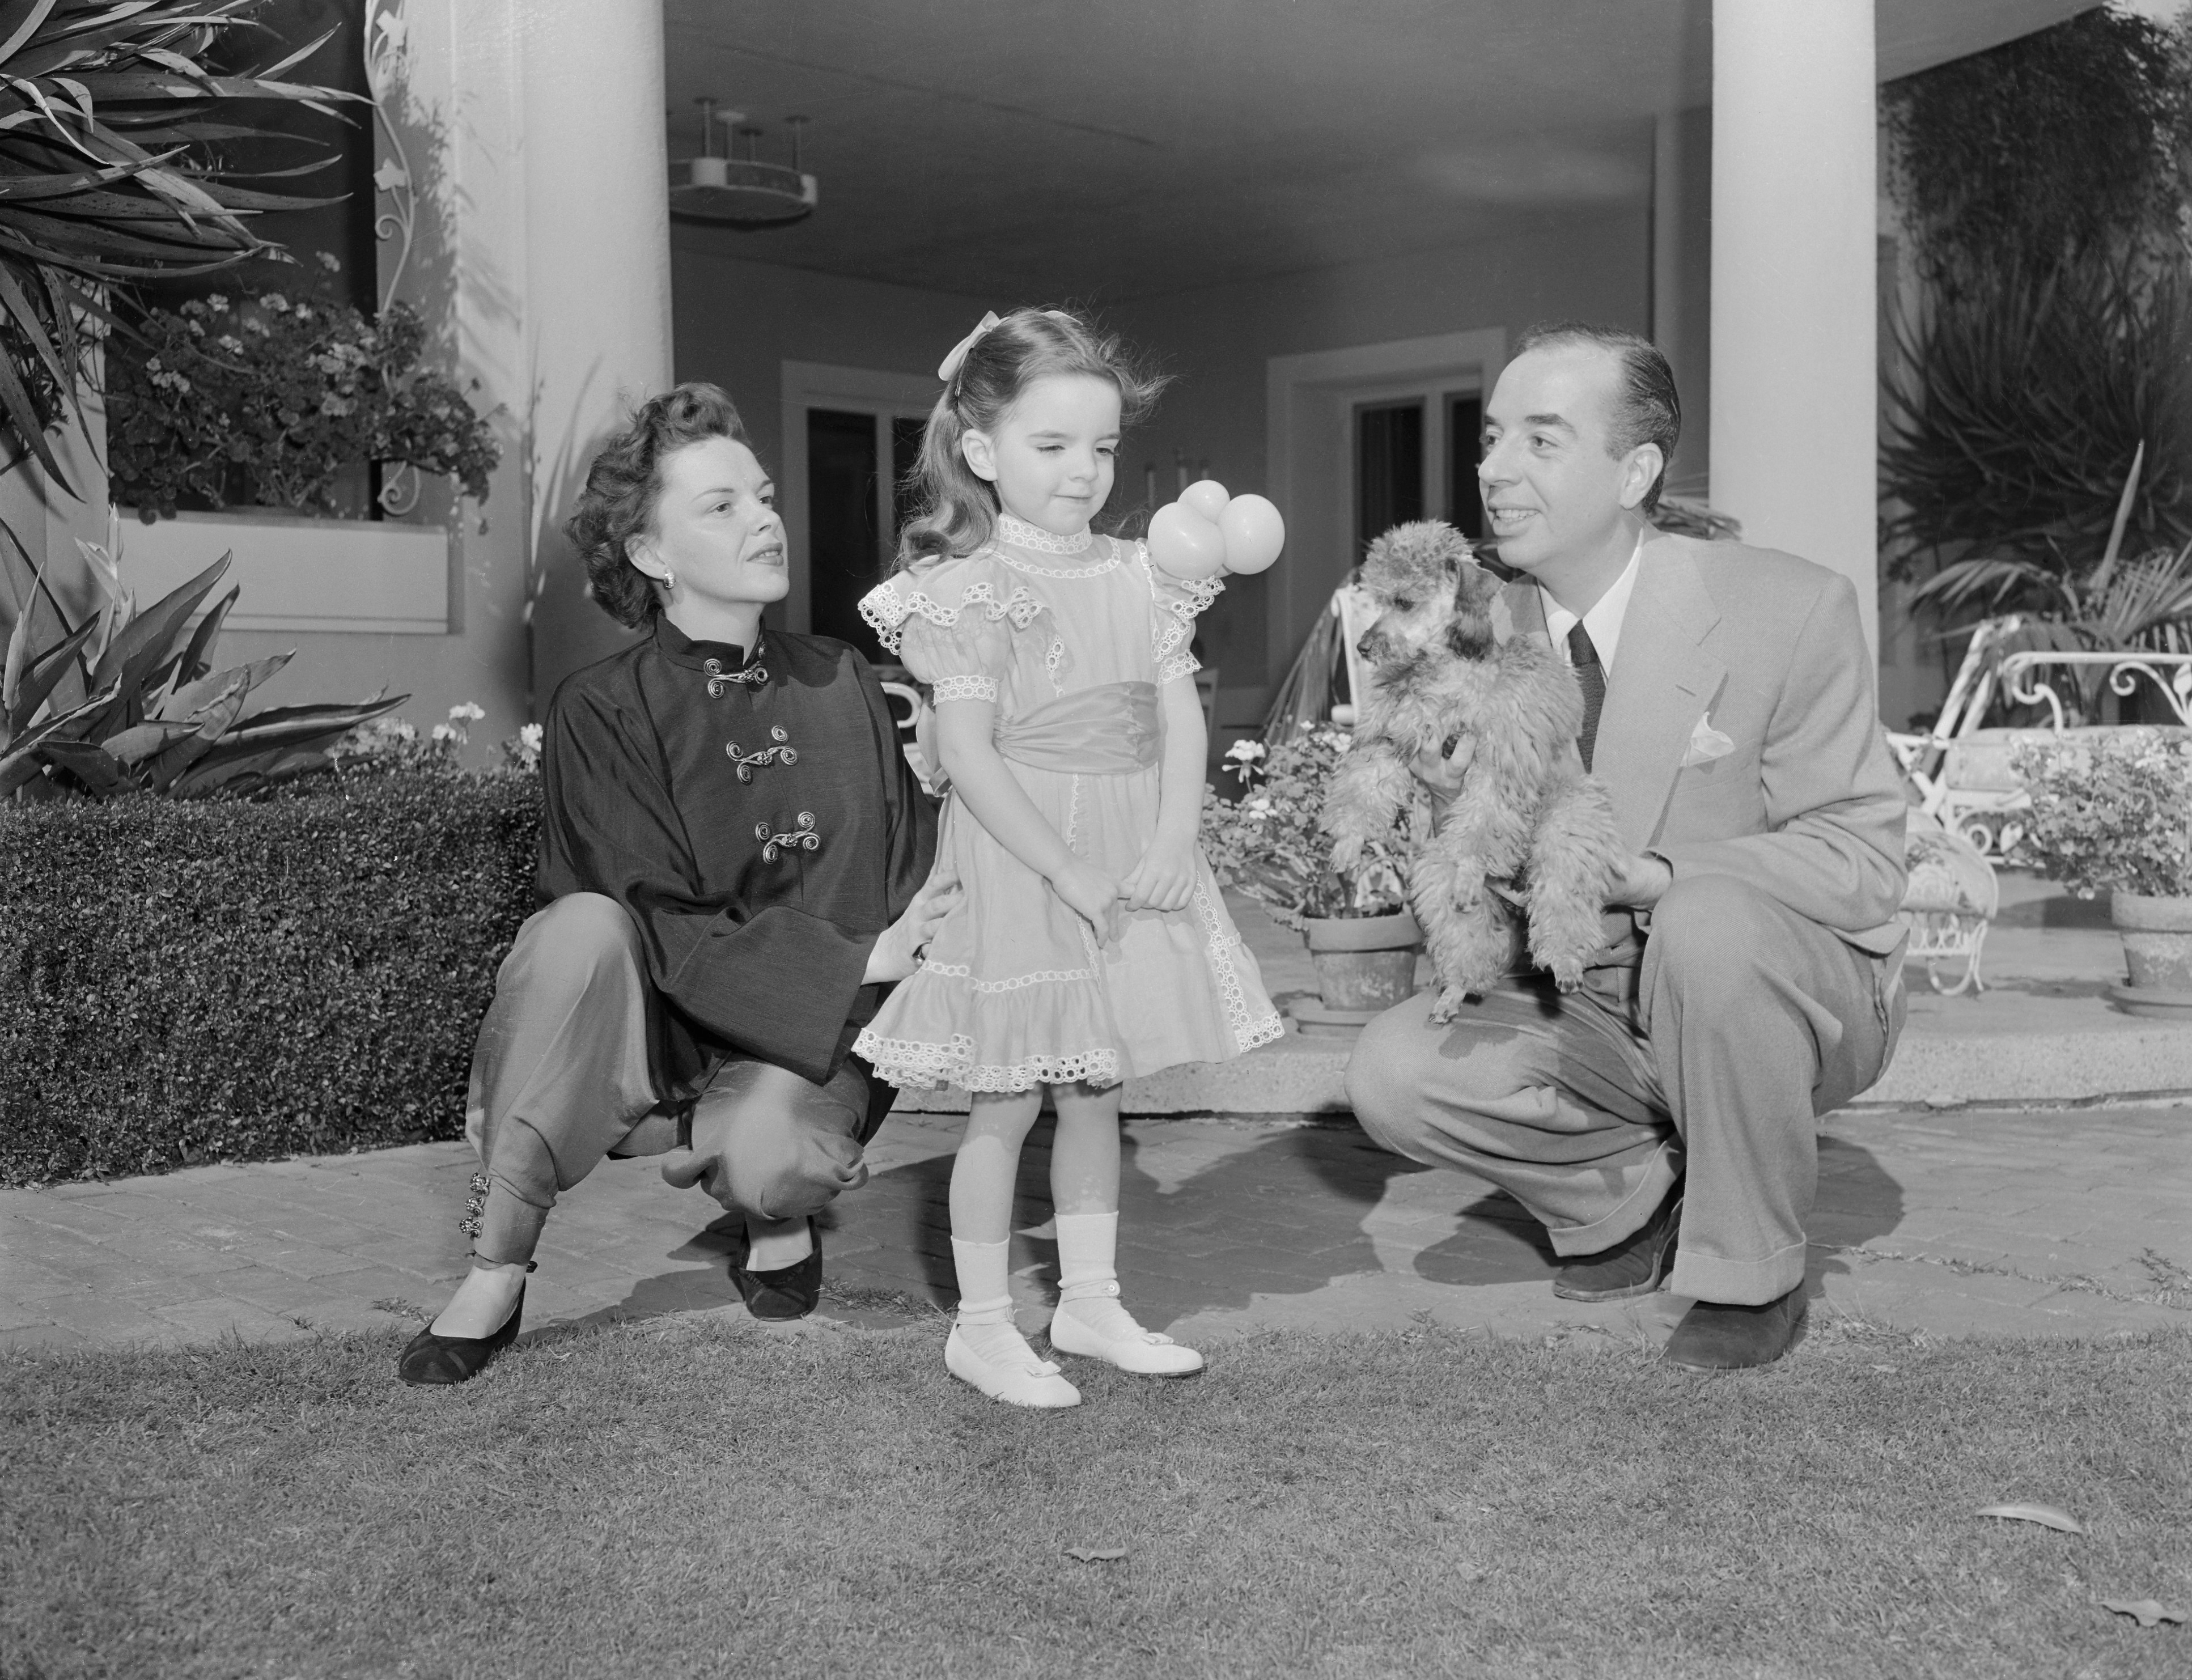 Judy Garland with her husband, director Vincente Minnelli, and their daughter Liza Minnelli. (Bettmann—Bettmann Archive)